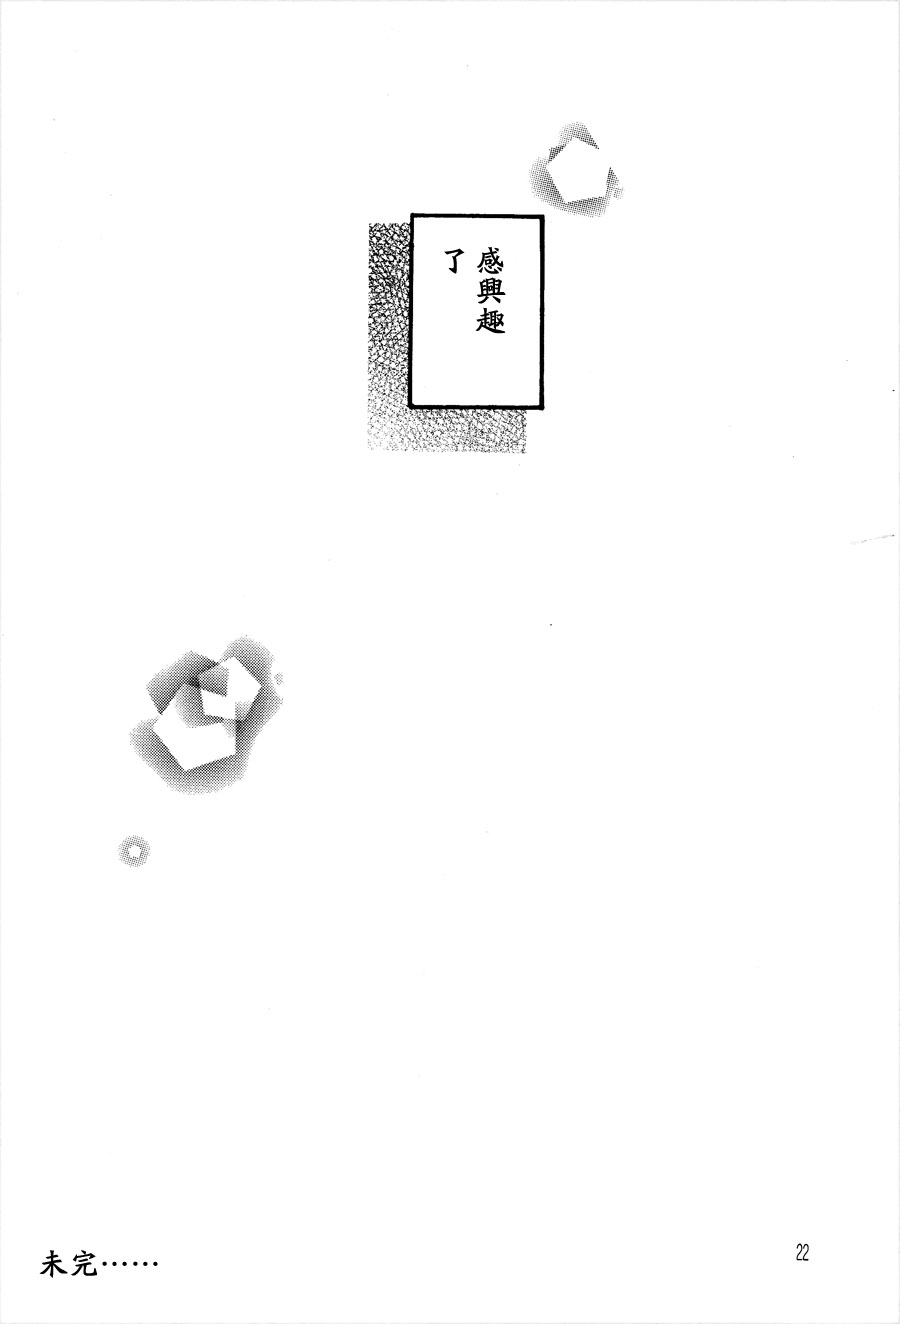 【漫画】Box Twin/如月円《比红色更红》NO.53 Img11607